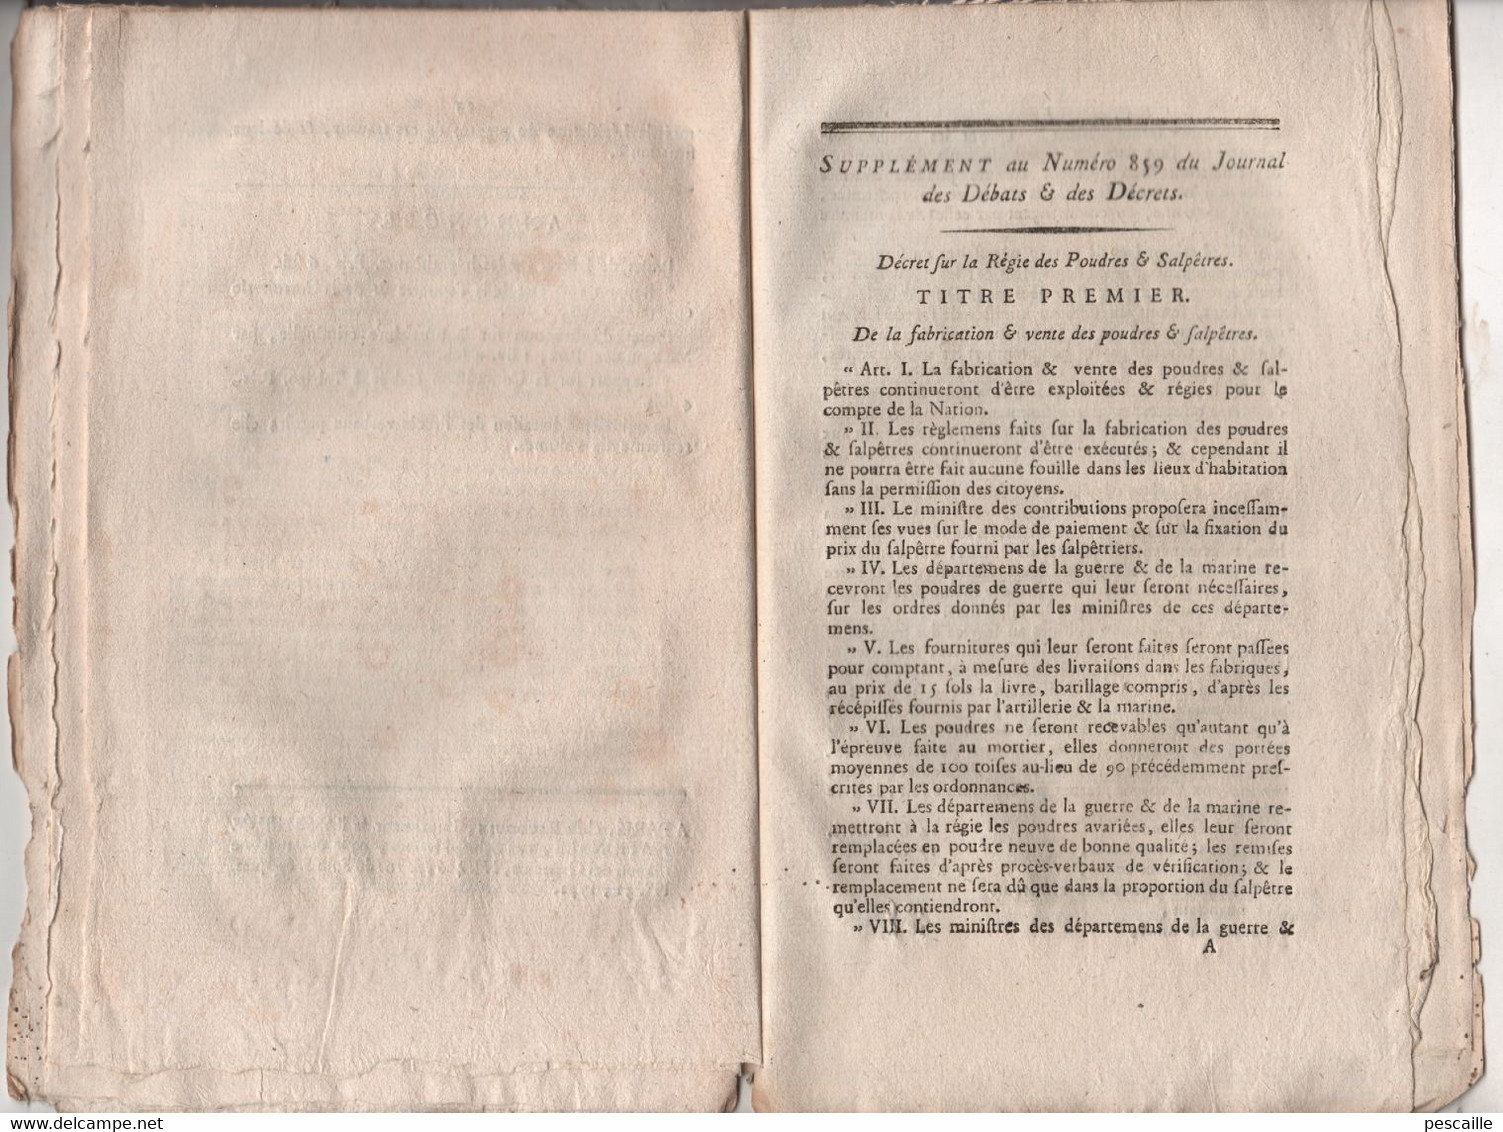 REVOLUTION FRANCAISE JOURNAL DES DEBATS 26 09 1791 - LOIS RURALES - GARDES CHAMPETRES - ROUEN - POUDRES SALPETRES - Periódicos - Antes 1800